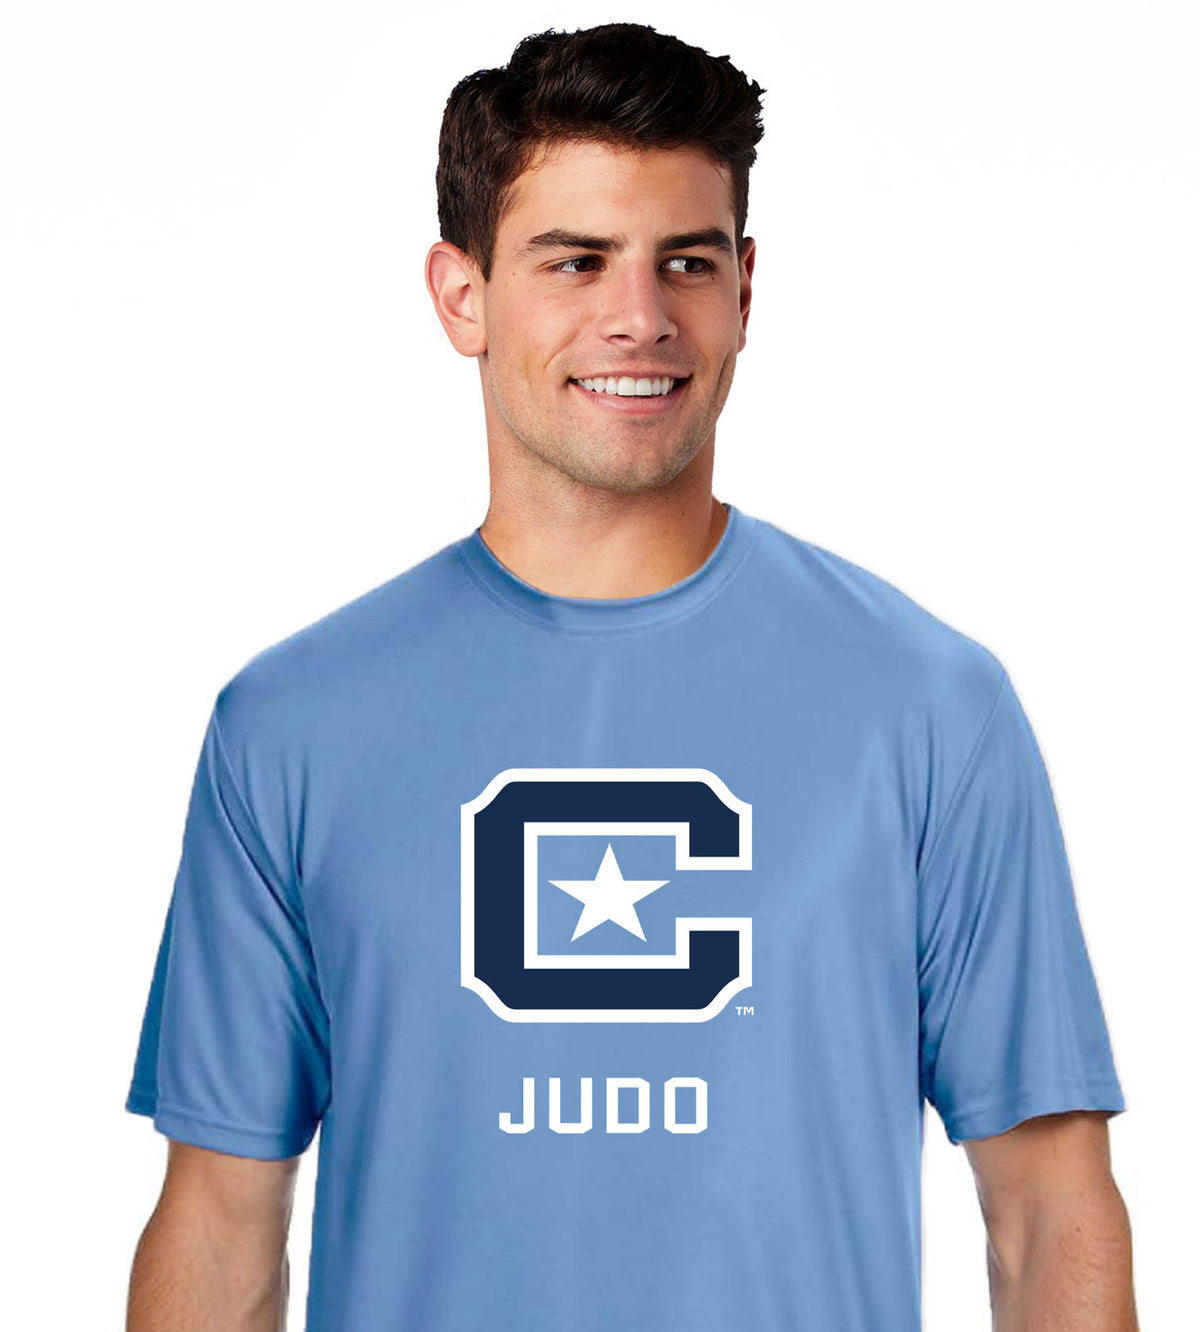 The Citadel, Club Sports - Judo, A4 Men's Cooling Performance T-Shirt